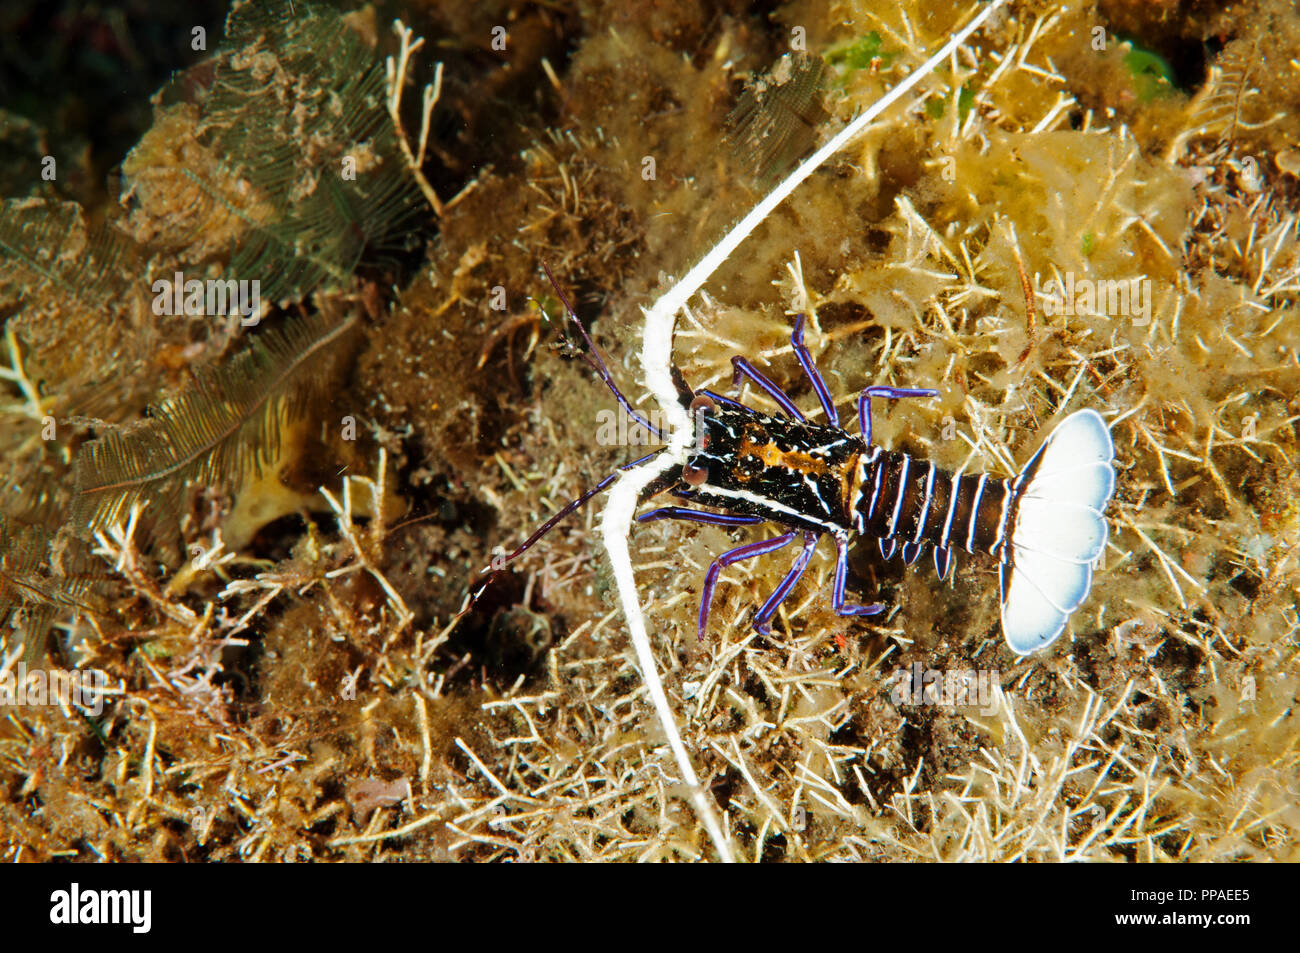 Spiny lobster, Panulirus versicolor, Bali Indonesia. Stock Photo